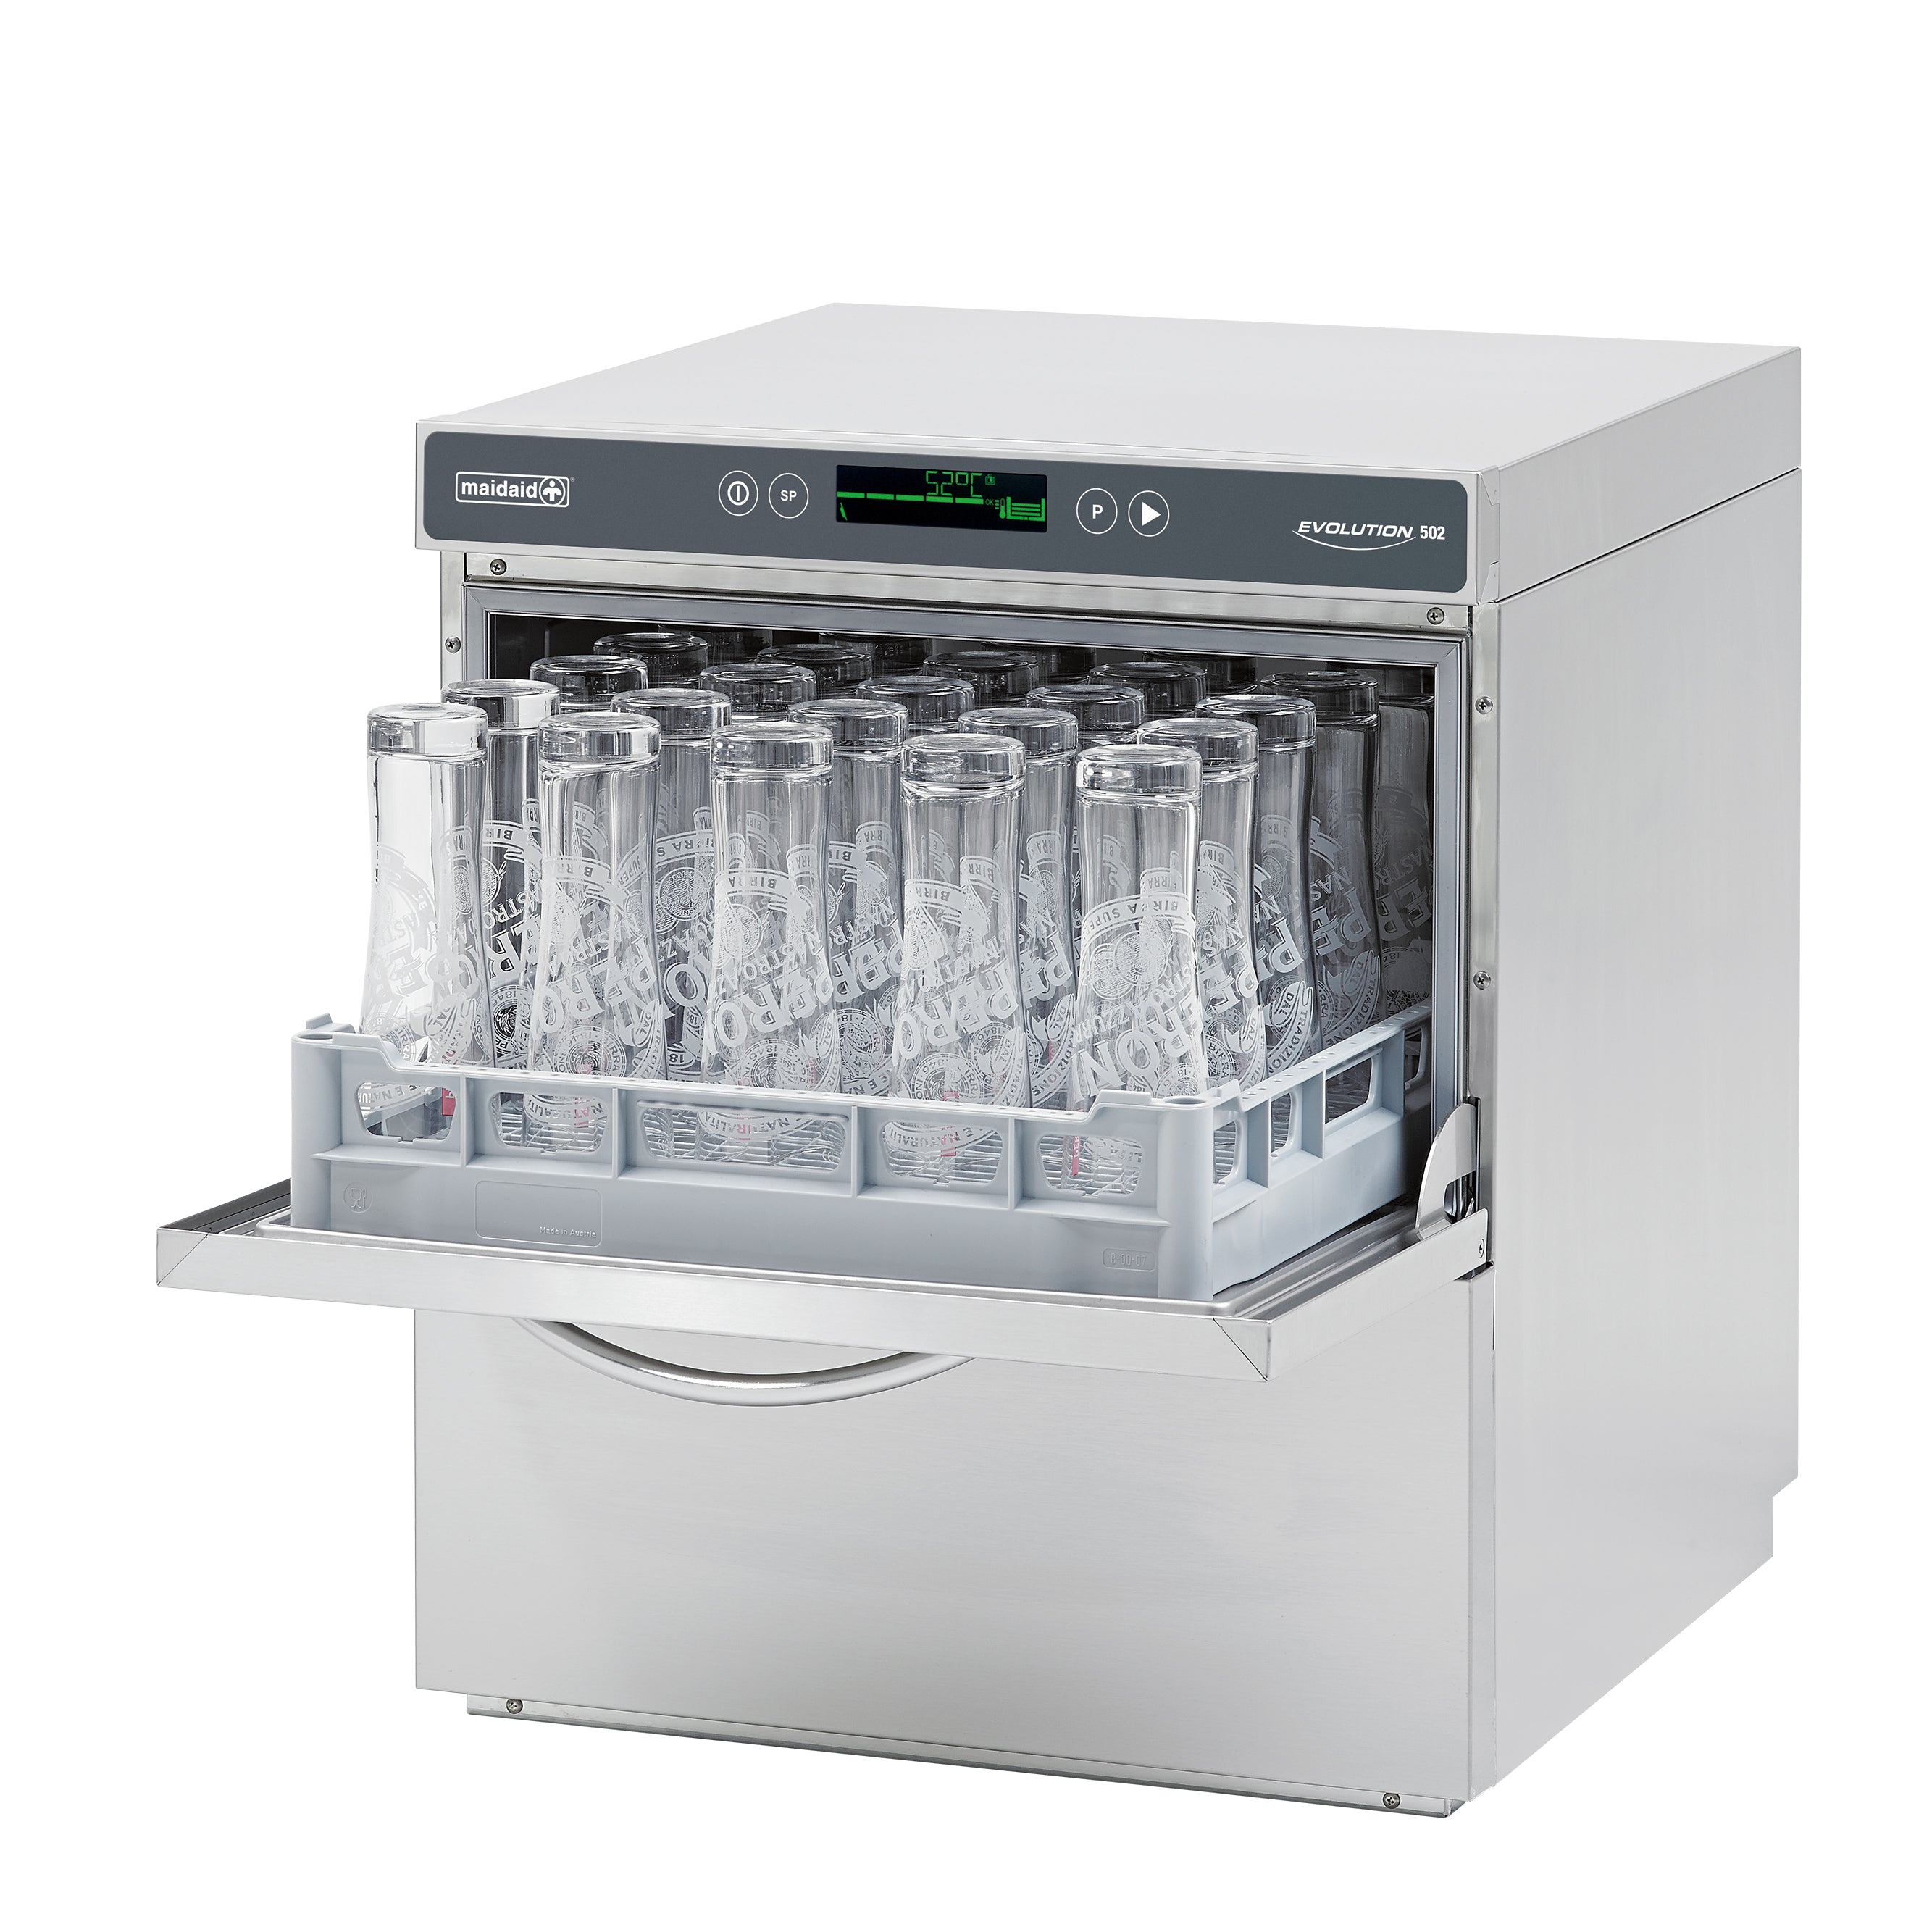 Maidaid EVO502 Glasswasher/Dishwasher JD Catering Equipment Solutions Ltd